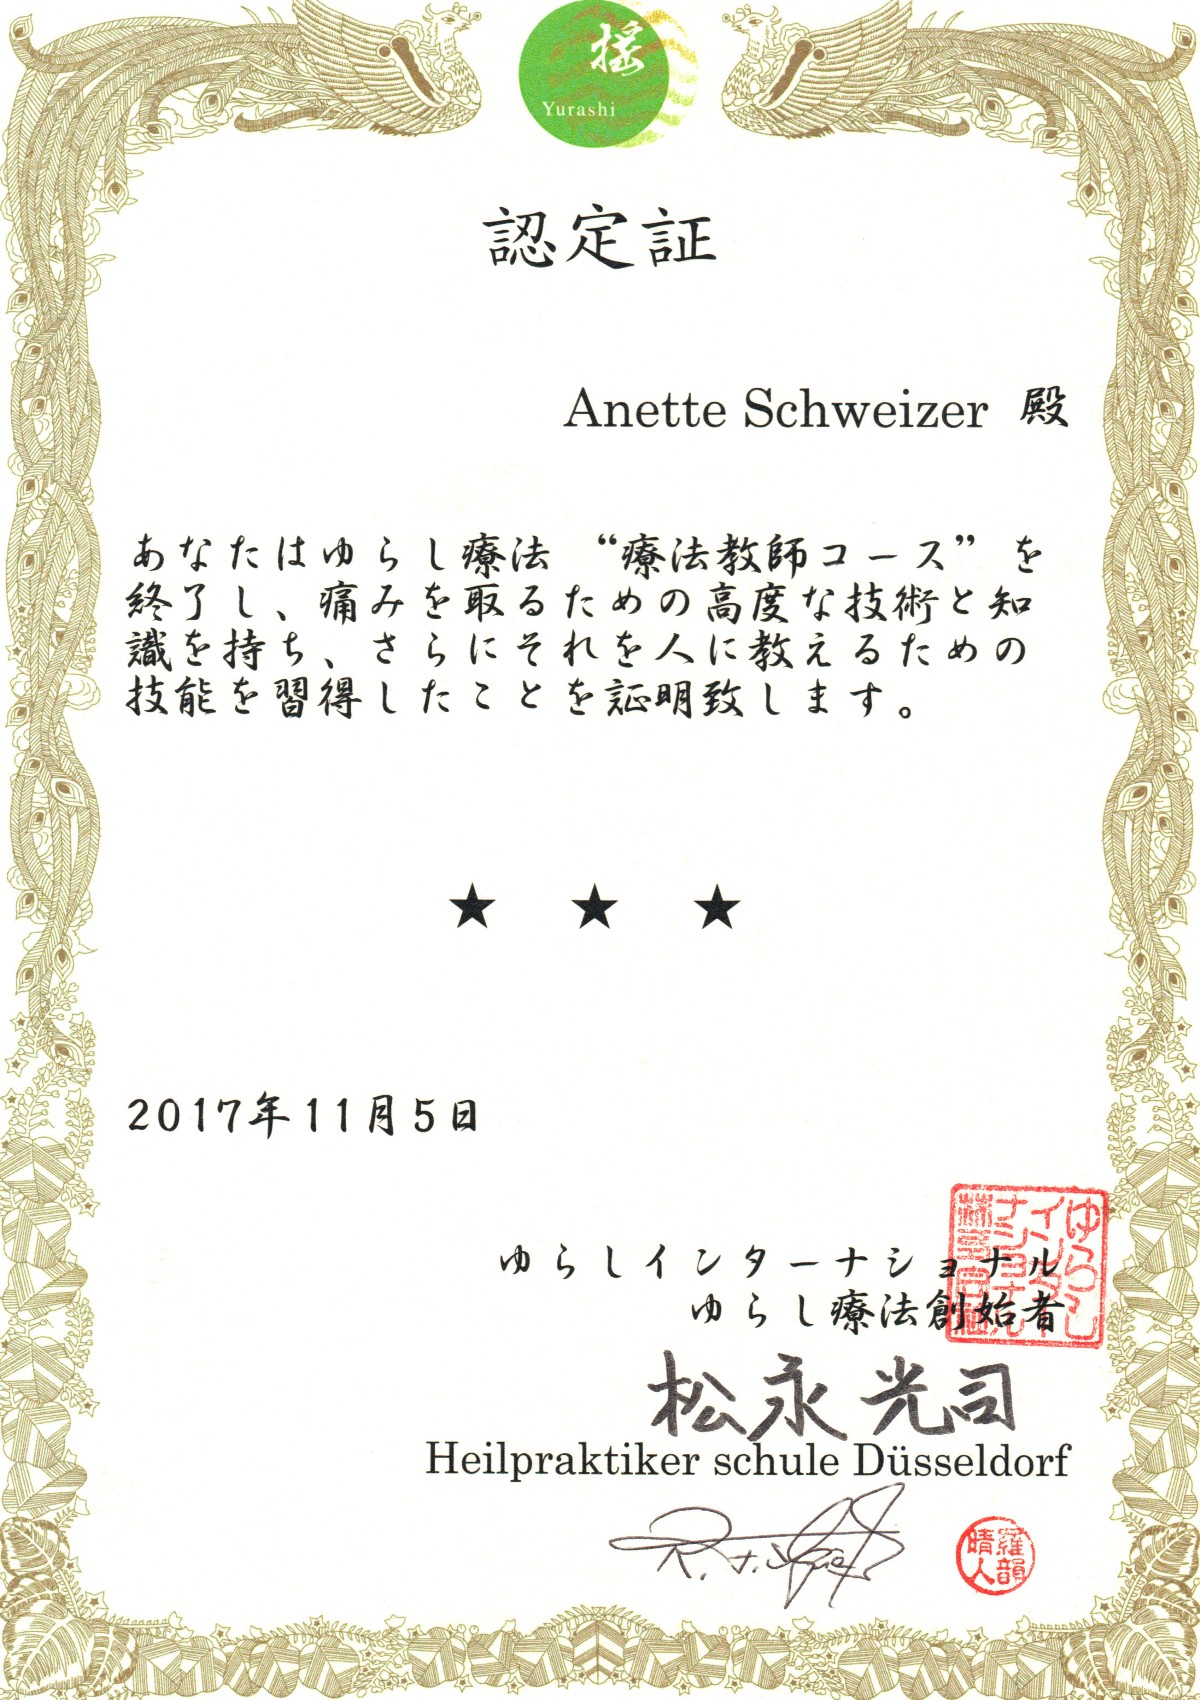 Yurashi Lehrtherapeut Zertifikat